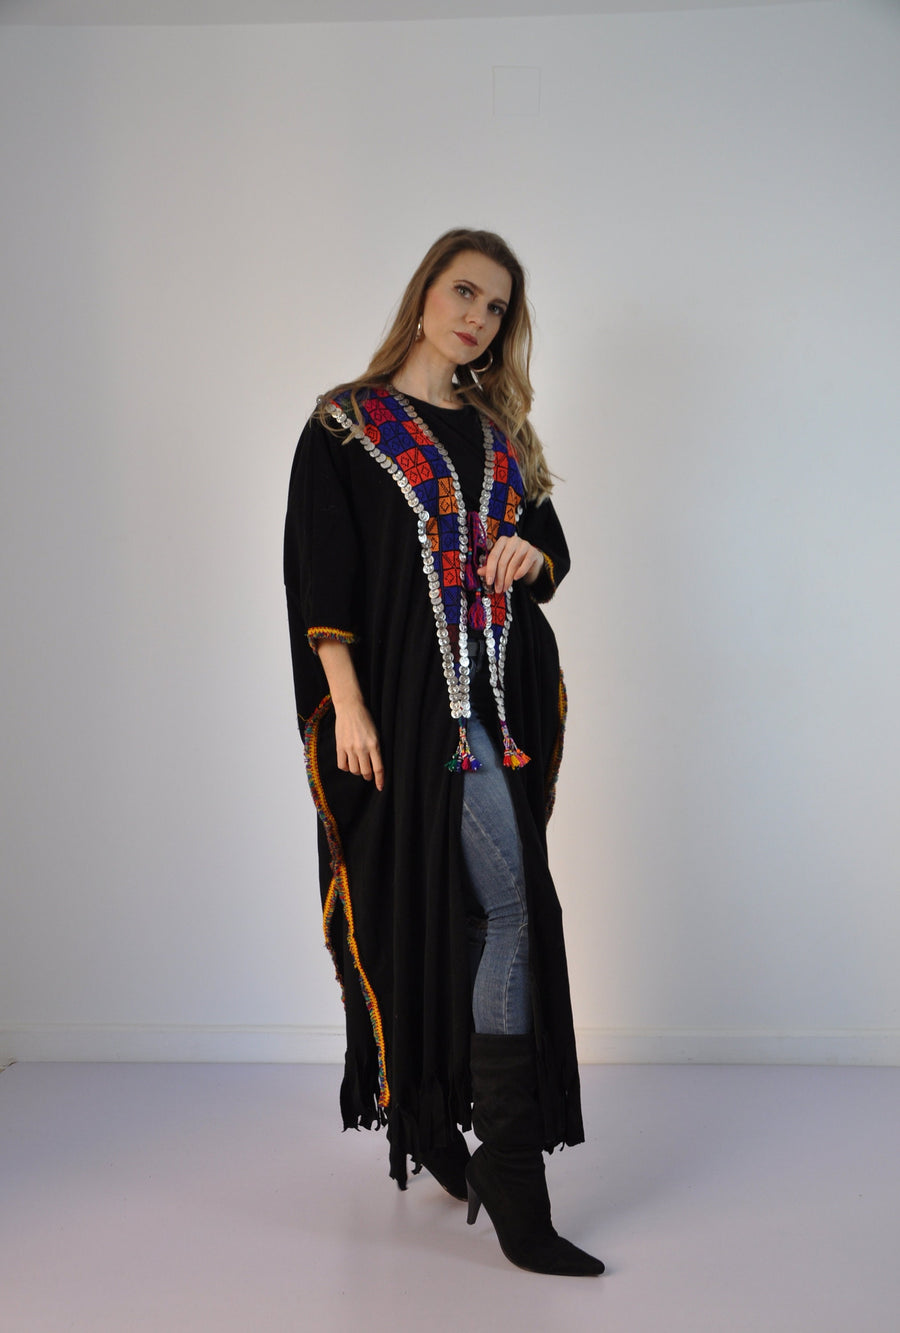 Bedouin Hand embroidered Kimono cardigan, Black Kimono, Boho Kimono Cardigan, Womens Cardigans, Boho Cardigan, Duster, Velvet Cardigan